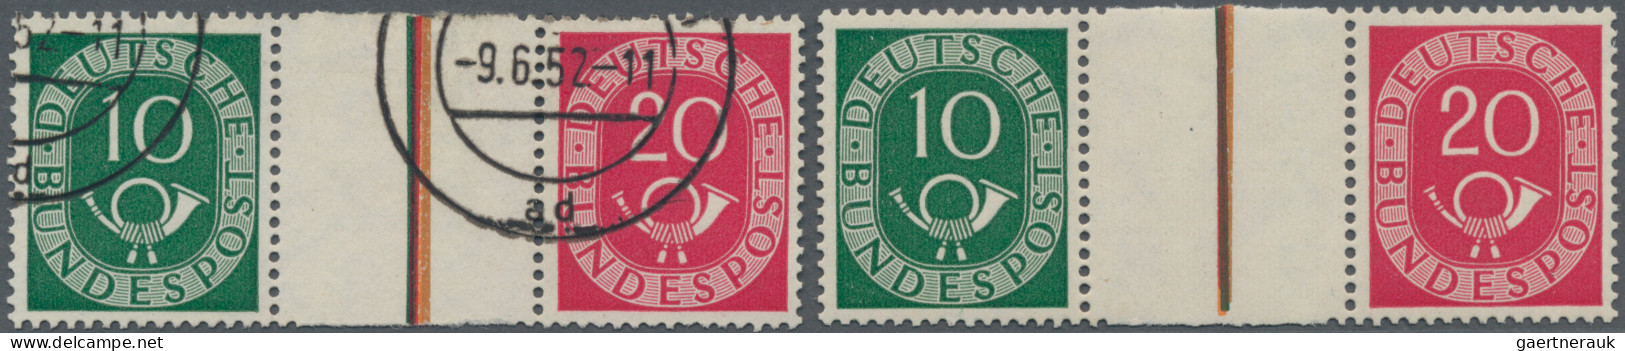 Bundesrepublik - Zusammendrucke: 1951, Posthorn 10+Z+20 (Pf), Zusammendruck Post - Se-Tenant